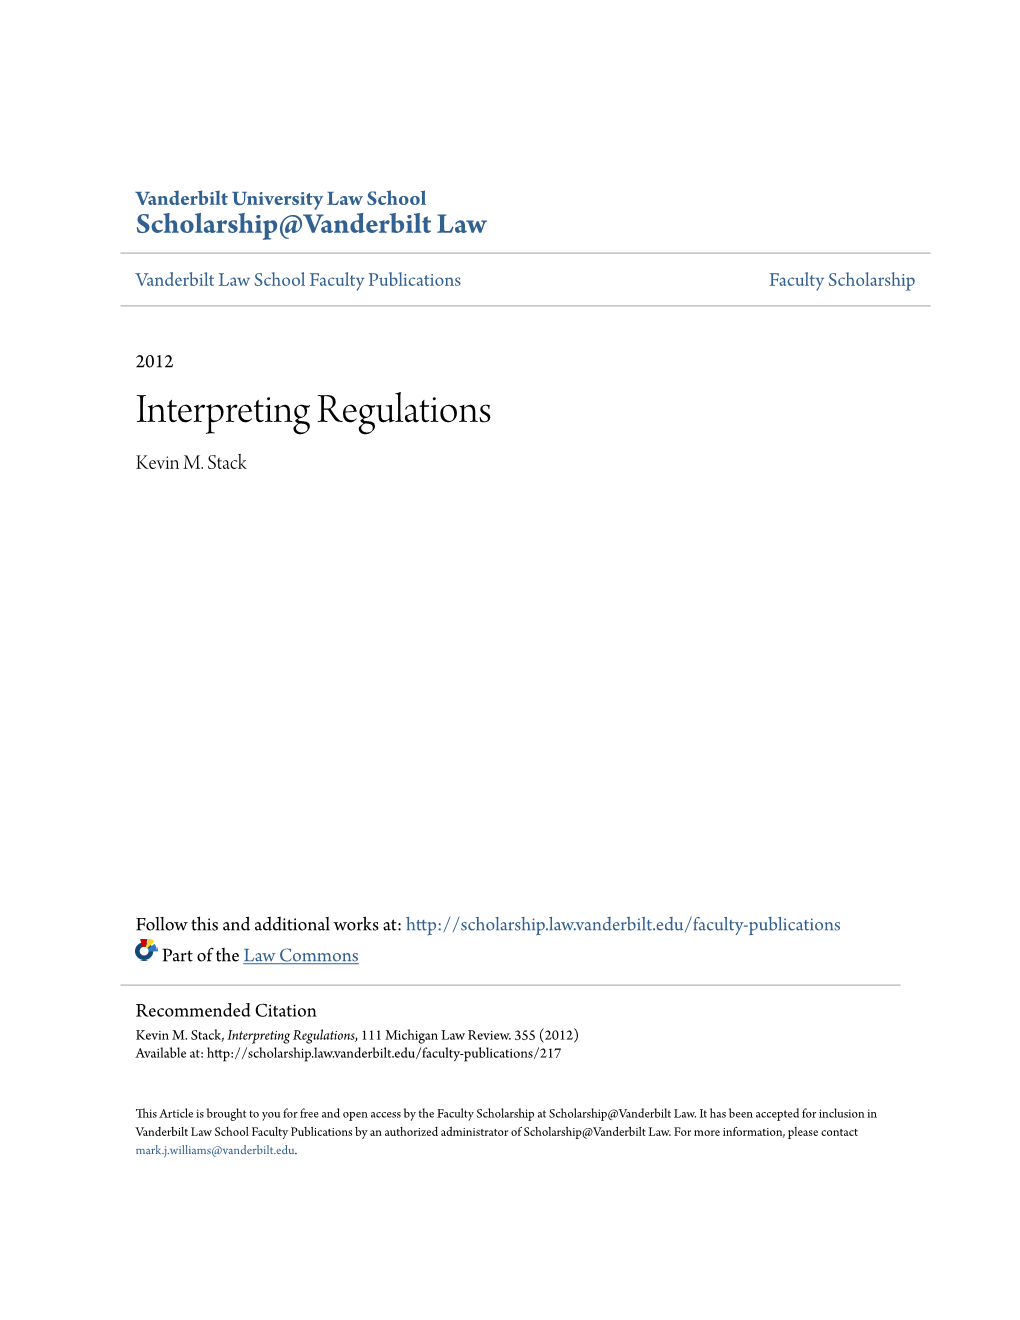 Interpreting Regulations Kevin M